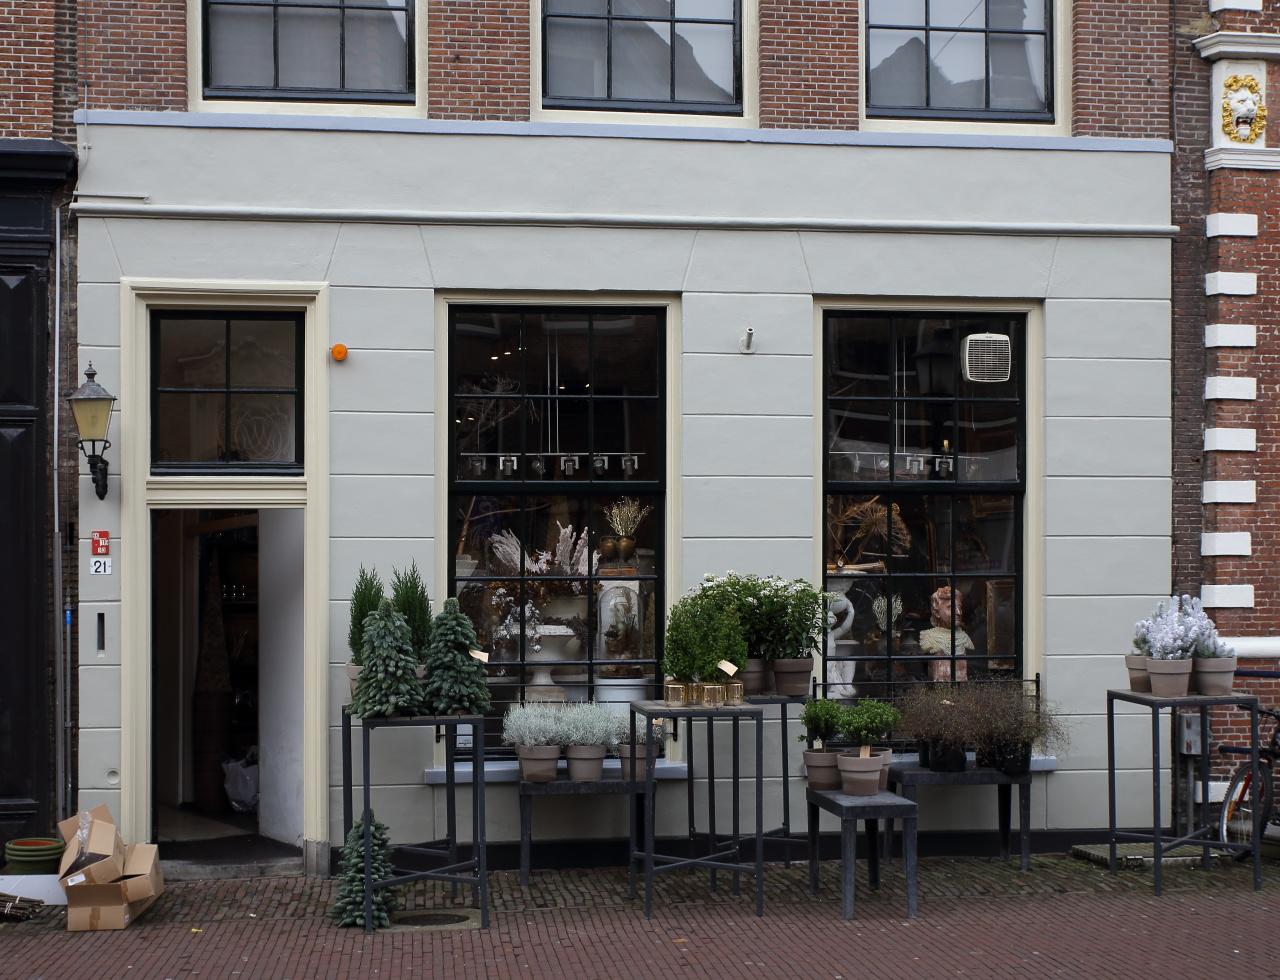 Foto Vok Jong in Hoorn, Einkaufen, Whonen & kochen - #4